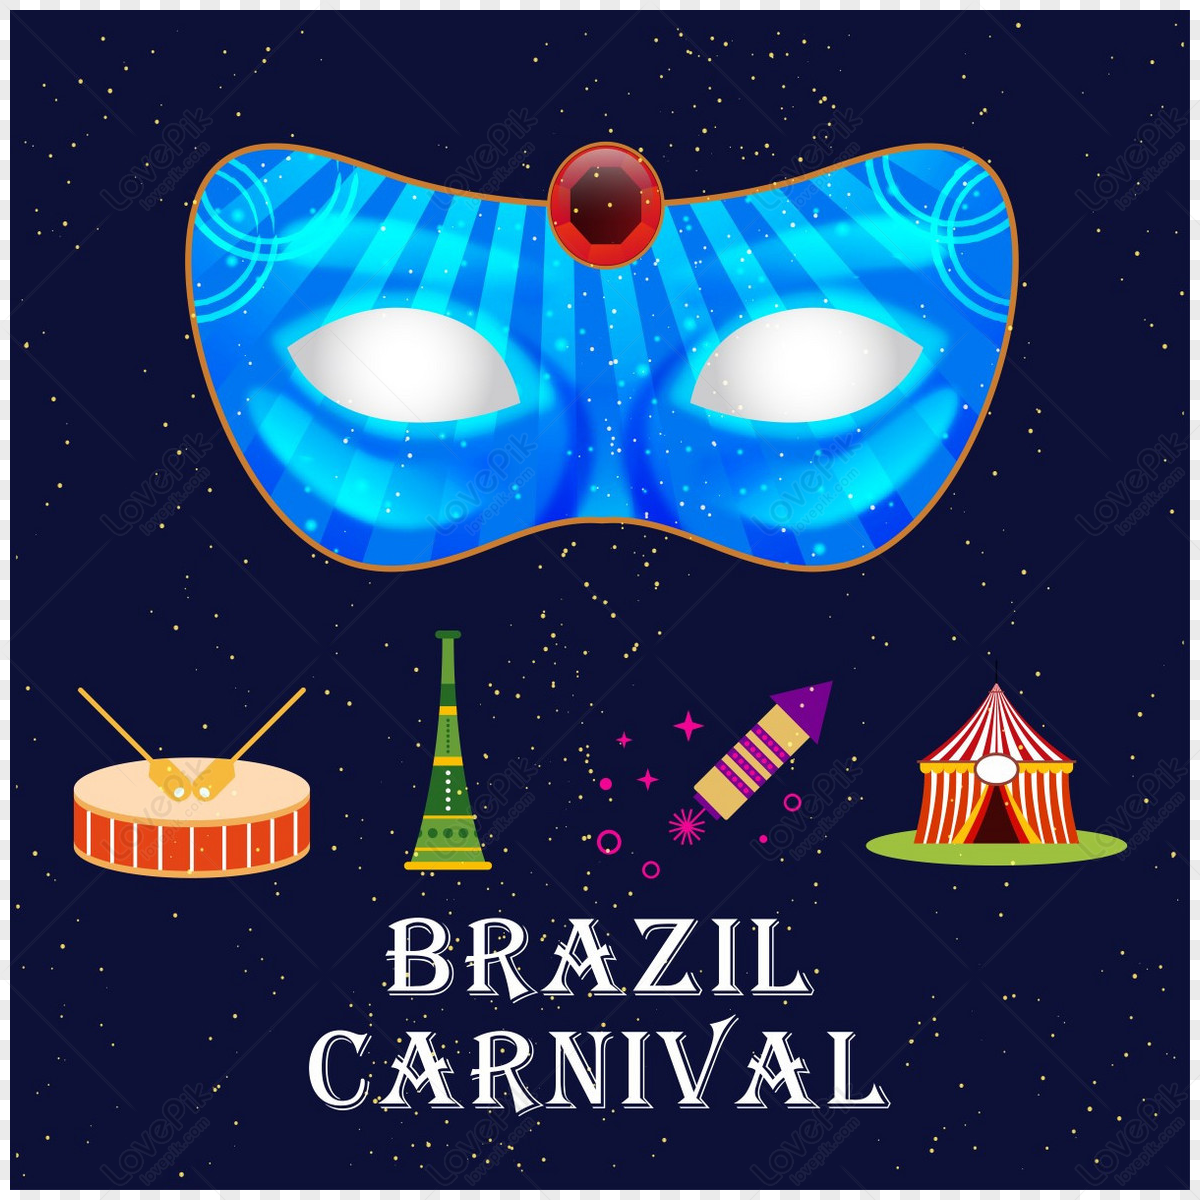 Máscara De Carnaval De Barazil Dorado PNG ,dibujos Máscara De Carnaval De  Barazil, Máscara De Carnaval, Máscara De Carnaval 3d PNG y PSD para  Descargar Gratis